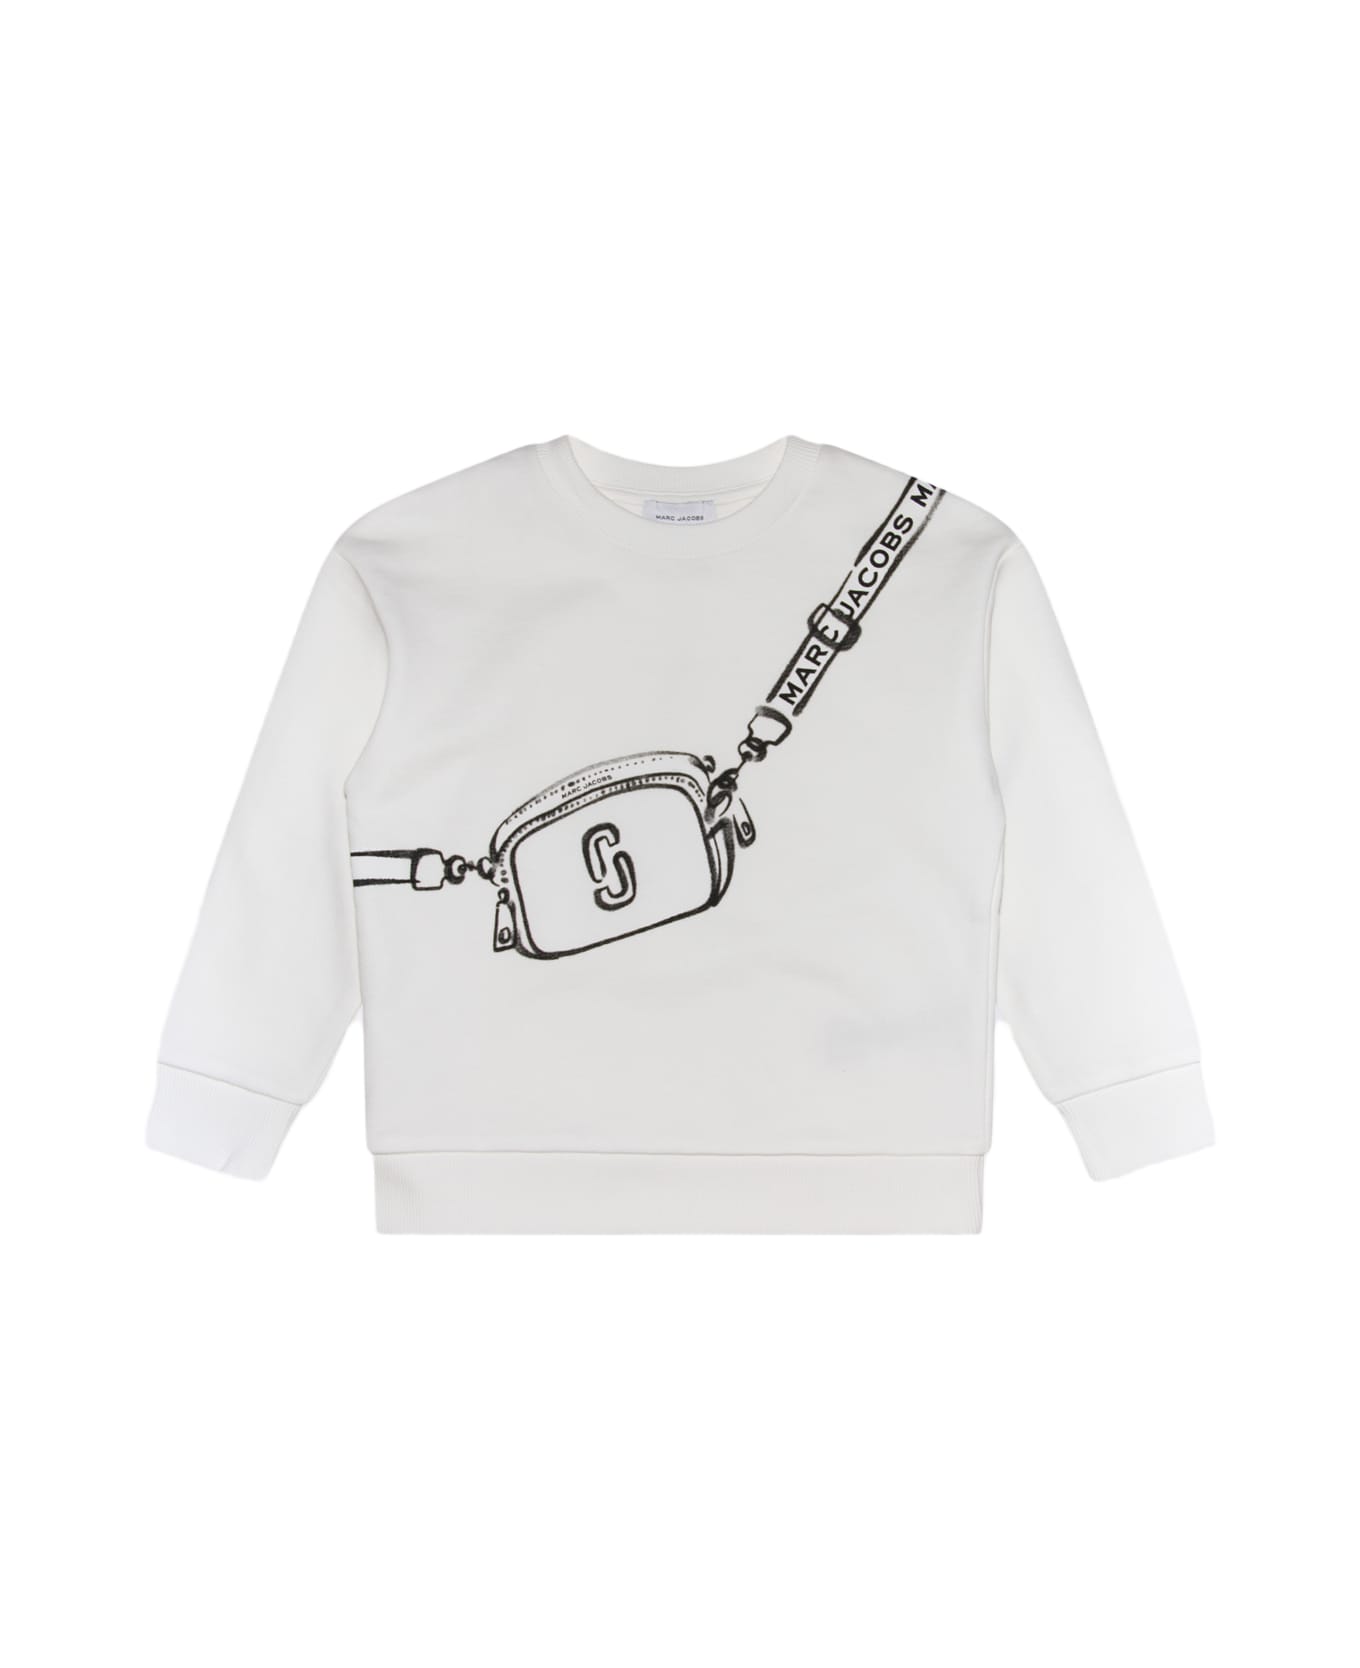 Marc Jacobs White And Black Cotton Sweatshirt - Bianco